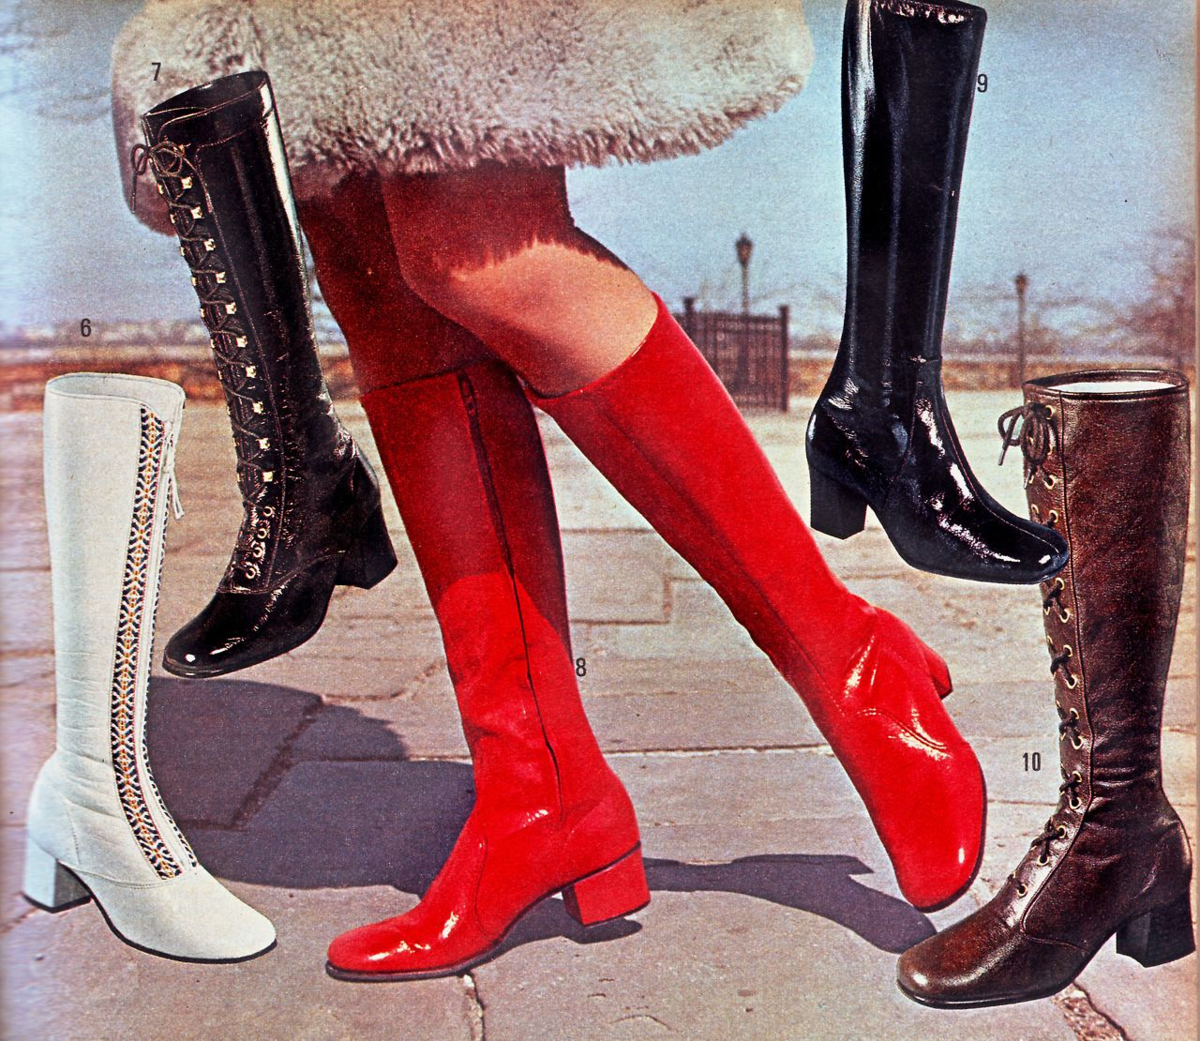 Сапоги 70 годов. Go-go Boots Fashion 1960 сапоги чулки. Сапоги чулки в 70е. Сапоги чулки СССР В 70е годы. Сапоги чулки 80-х годов.